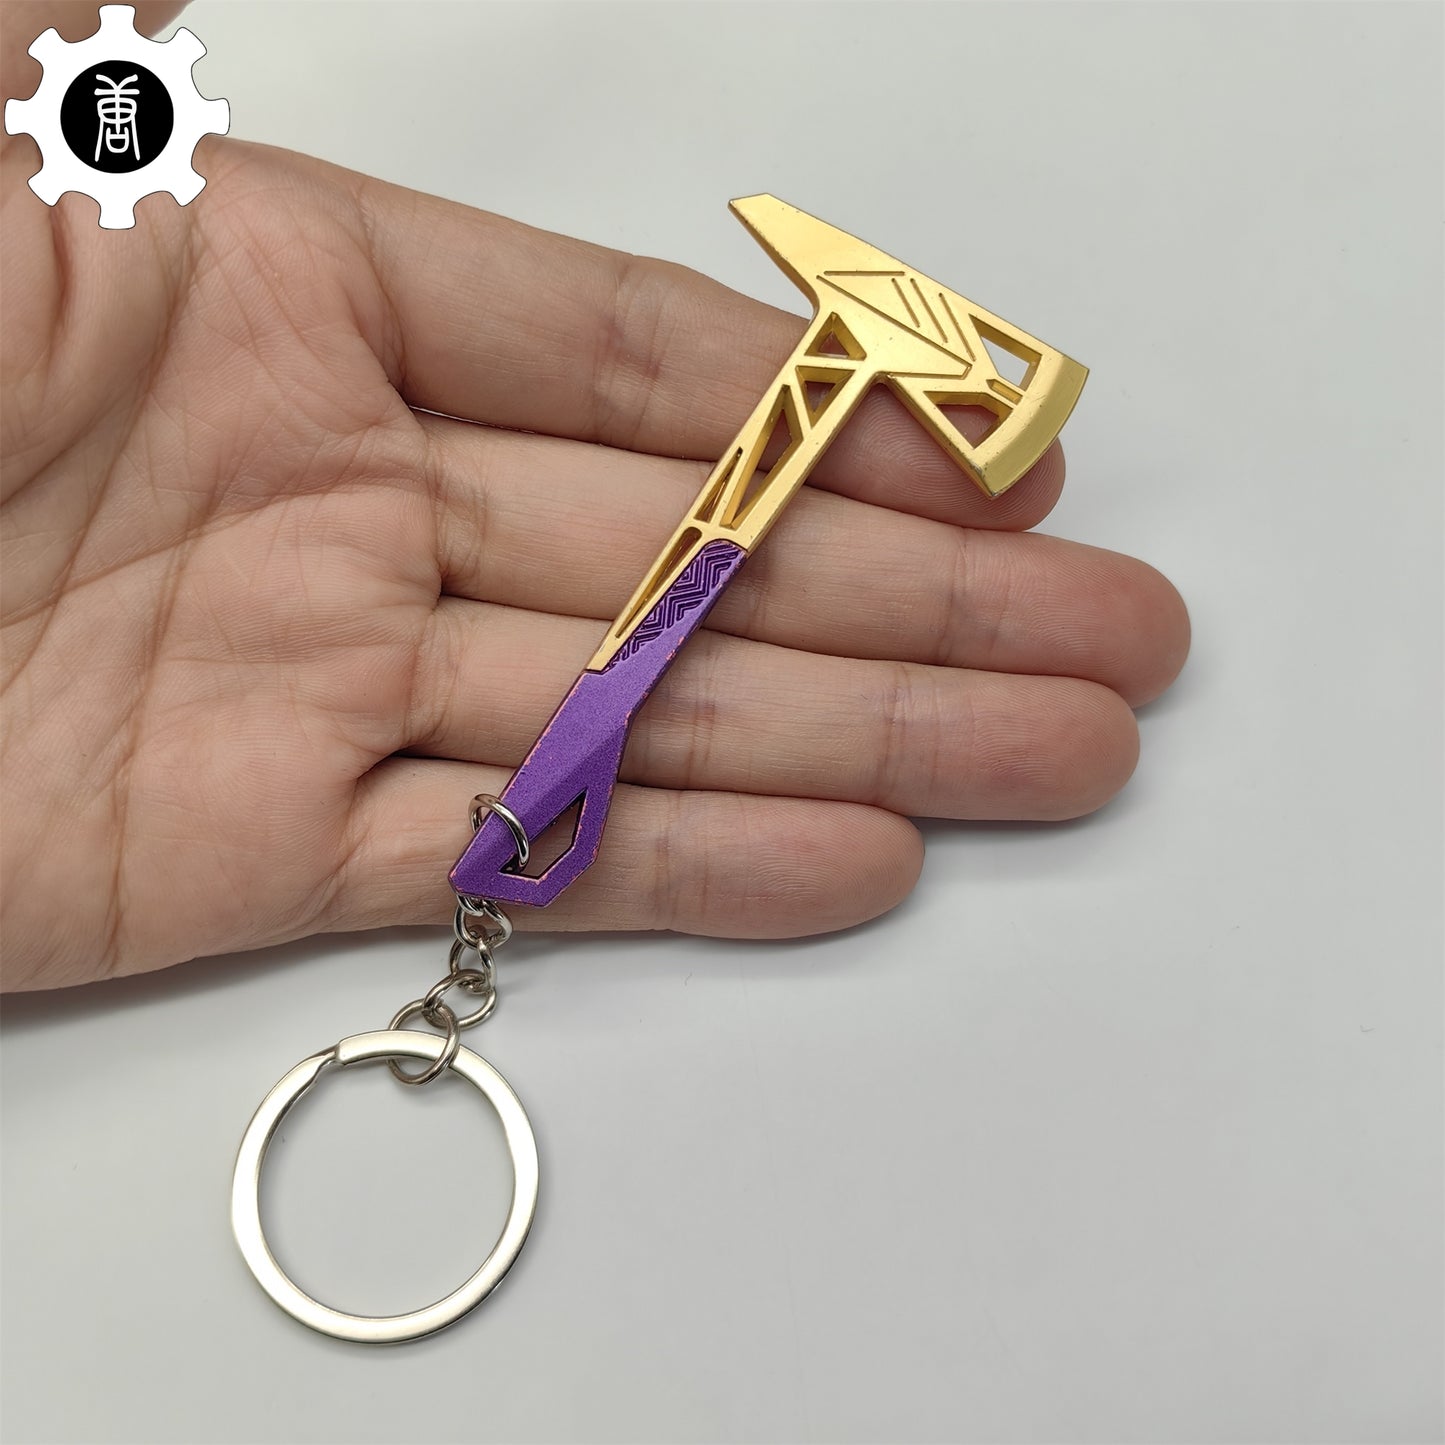 Val Prime Axe Keychain Metal Pendant